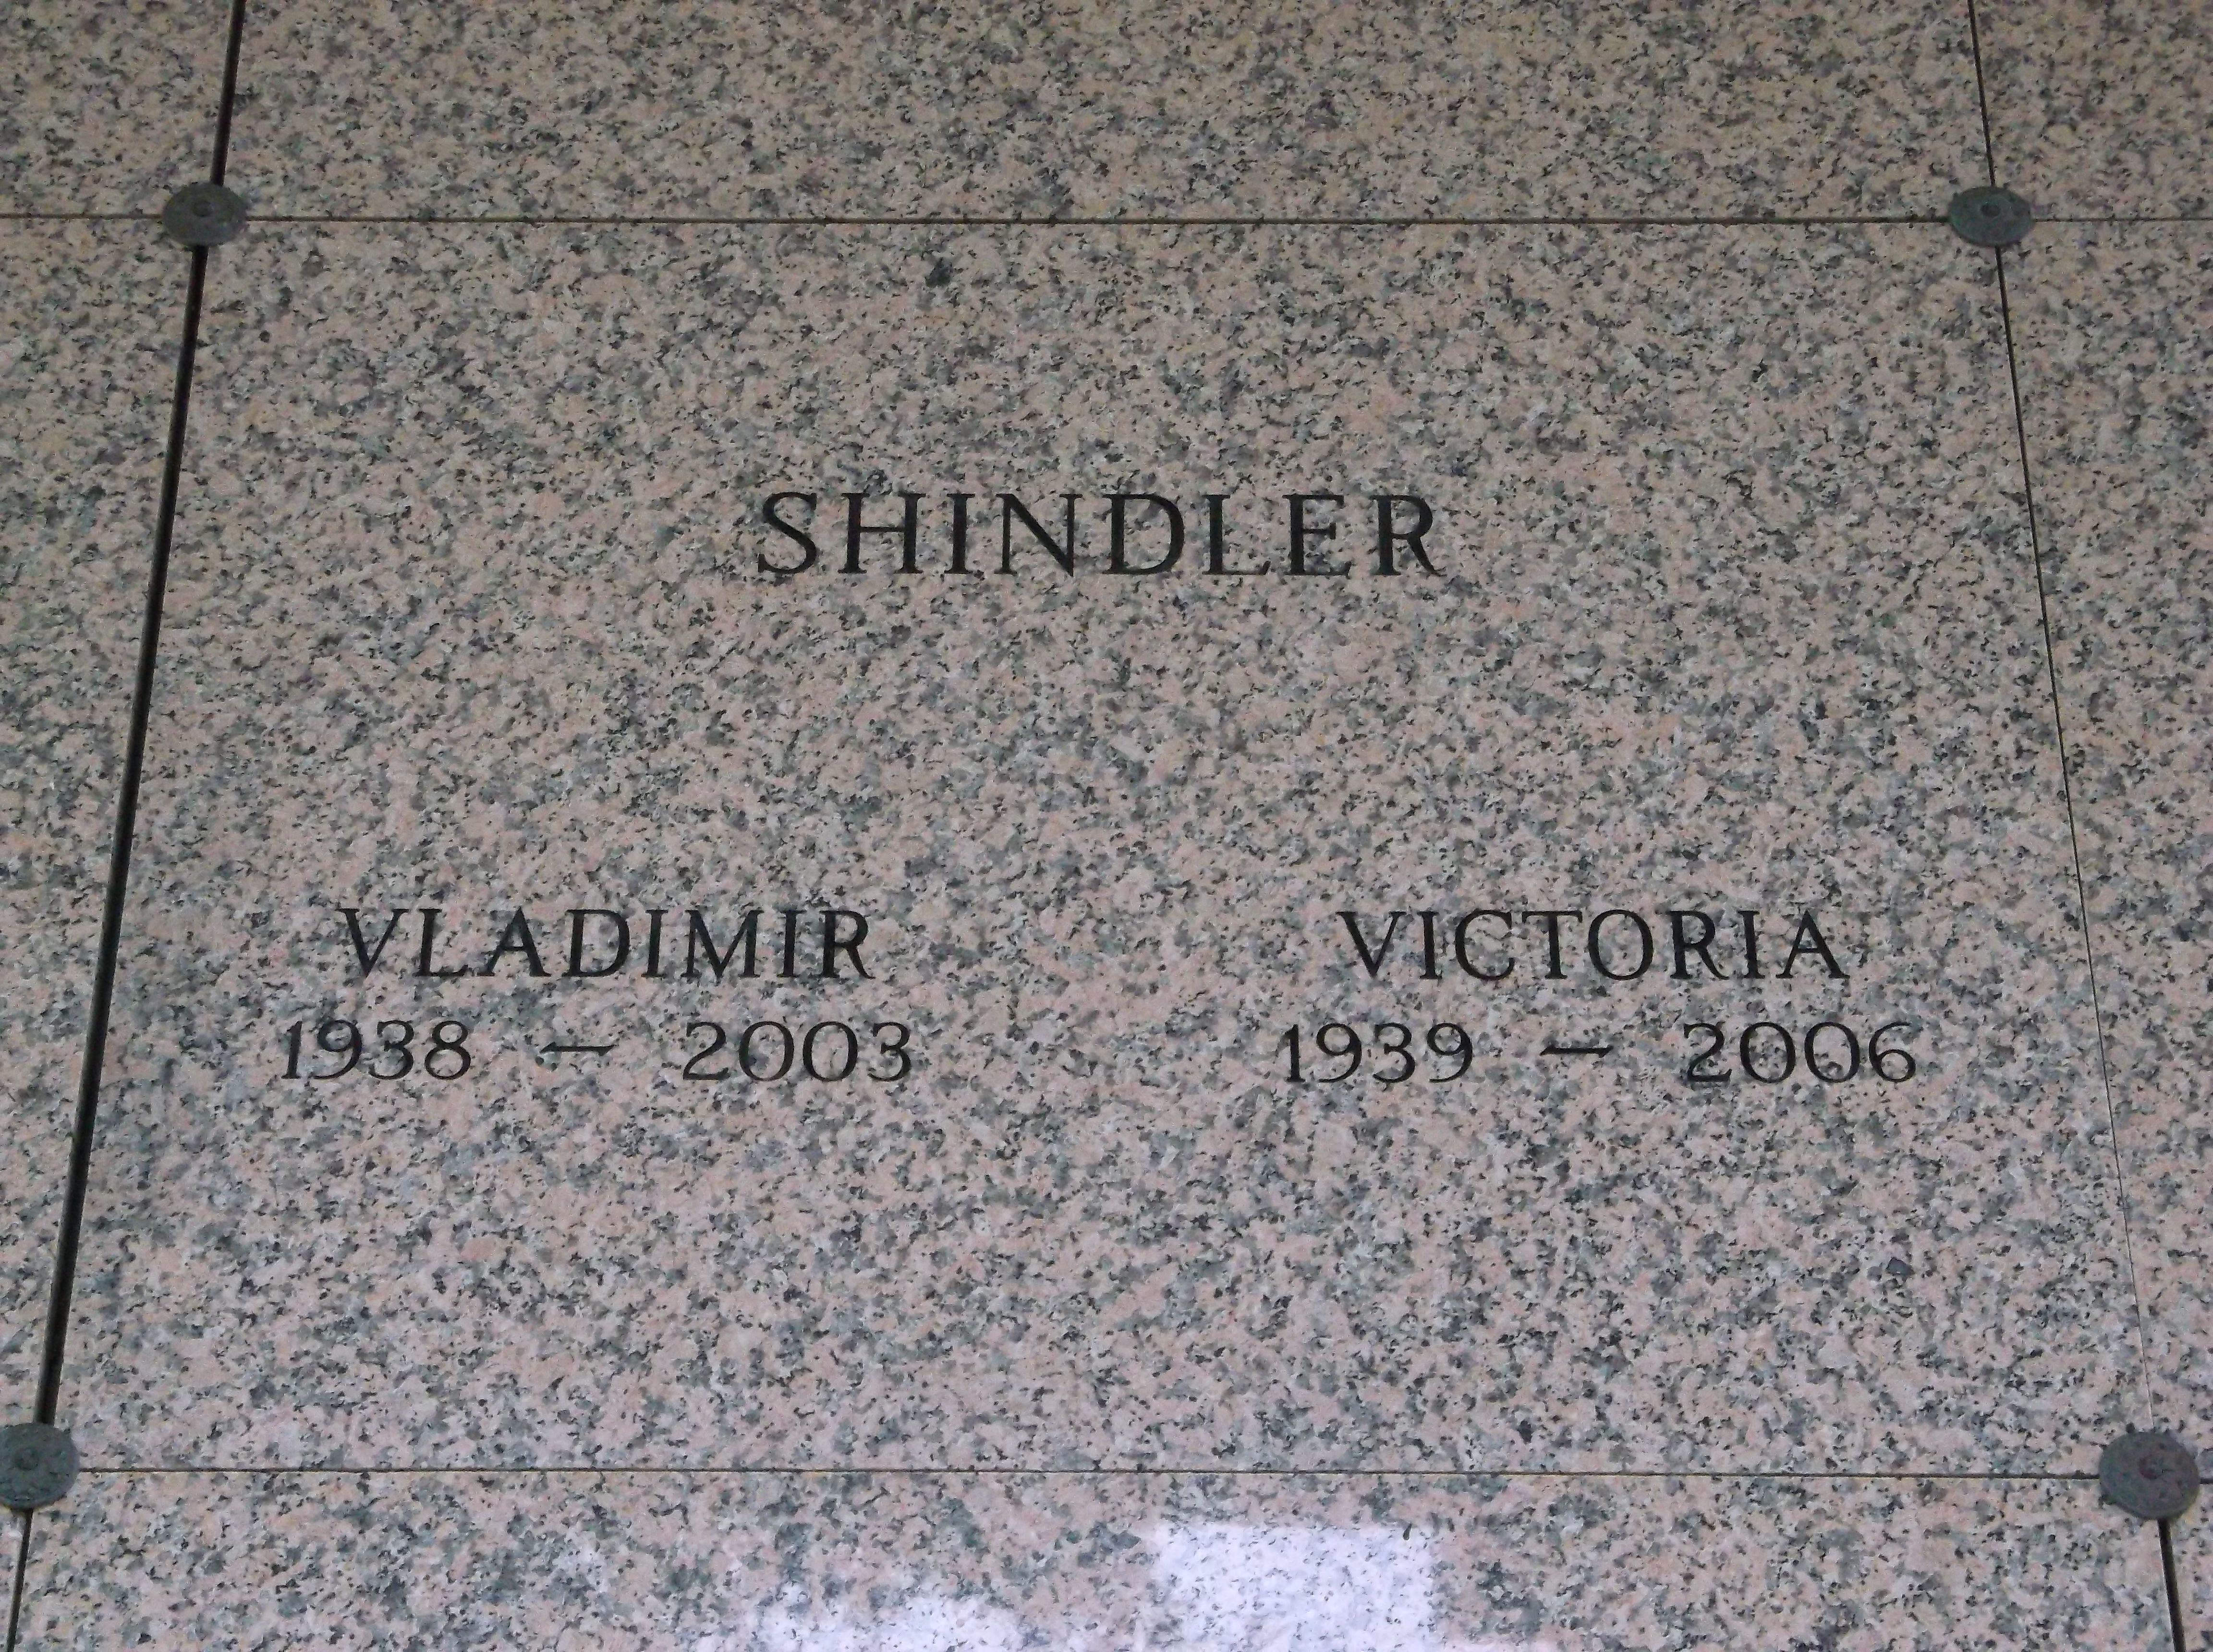 Vladimir Shindler